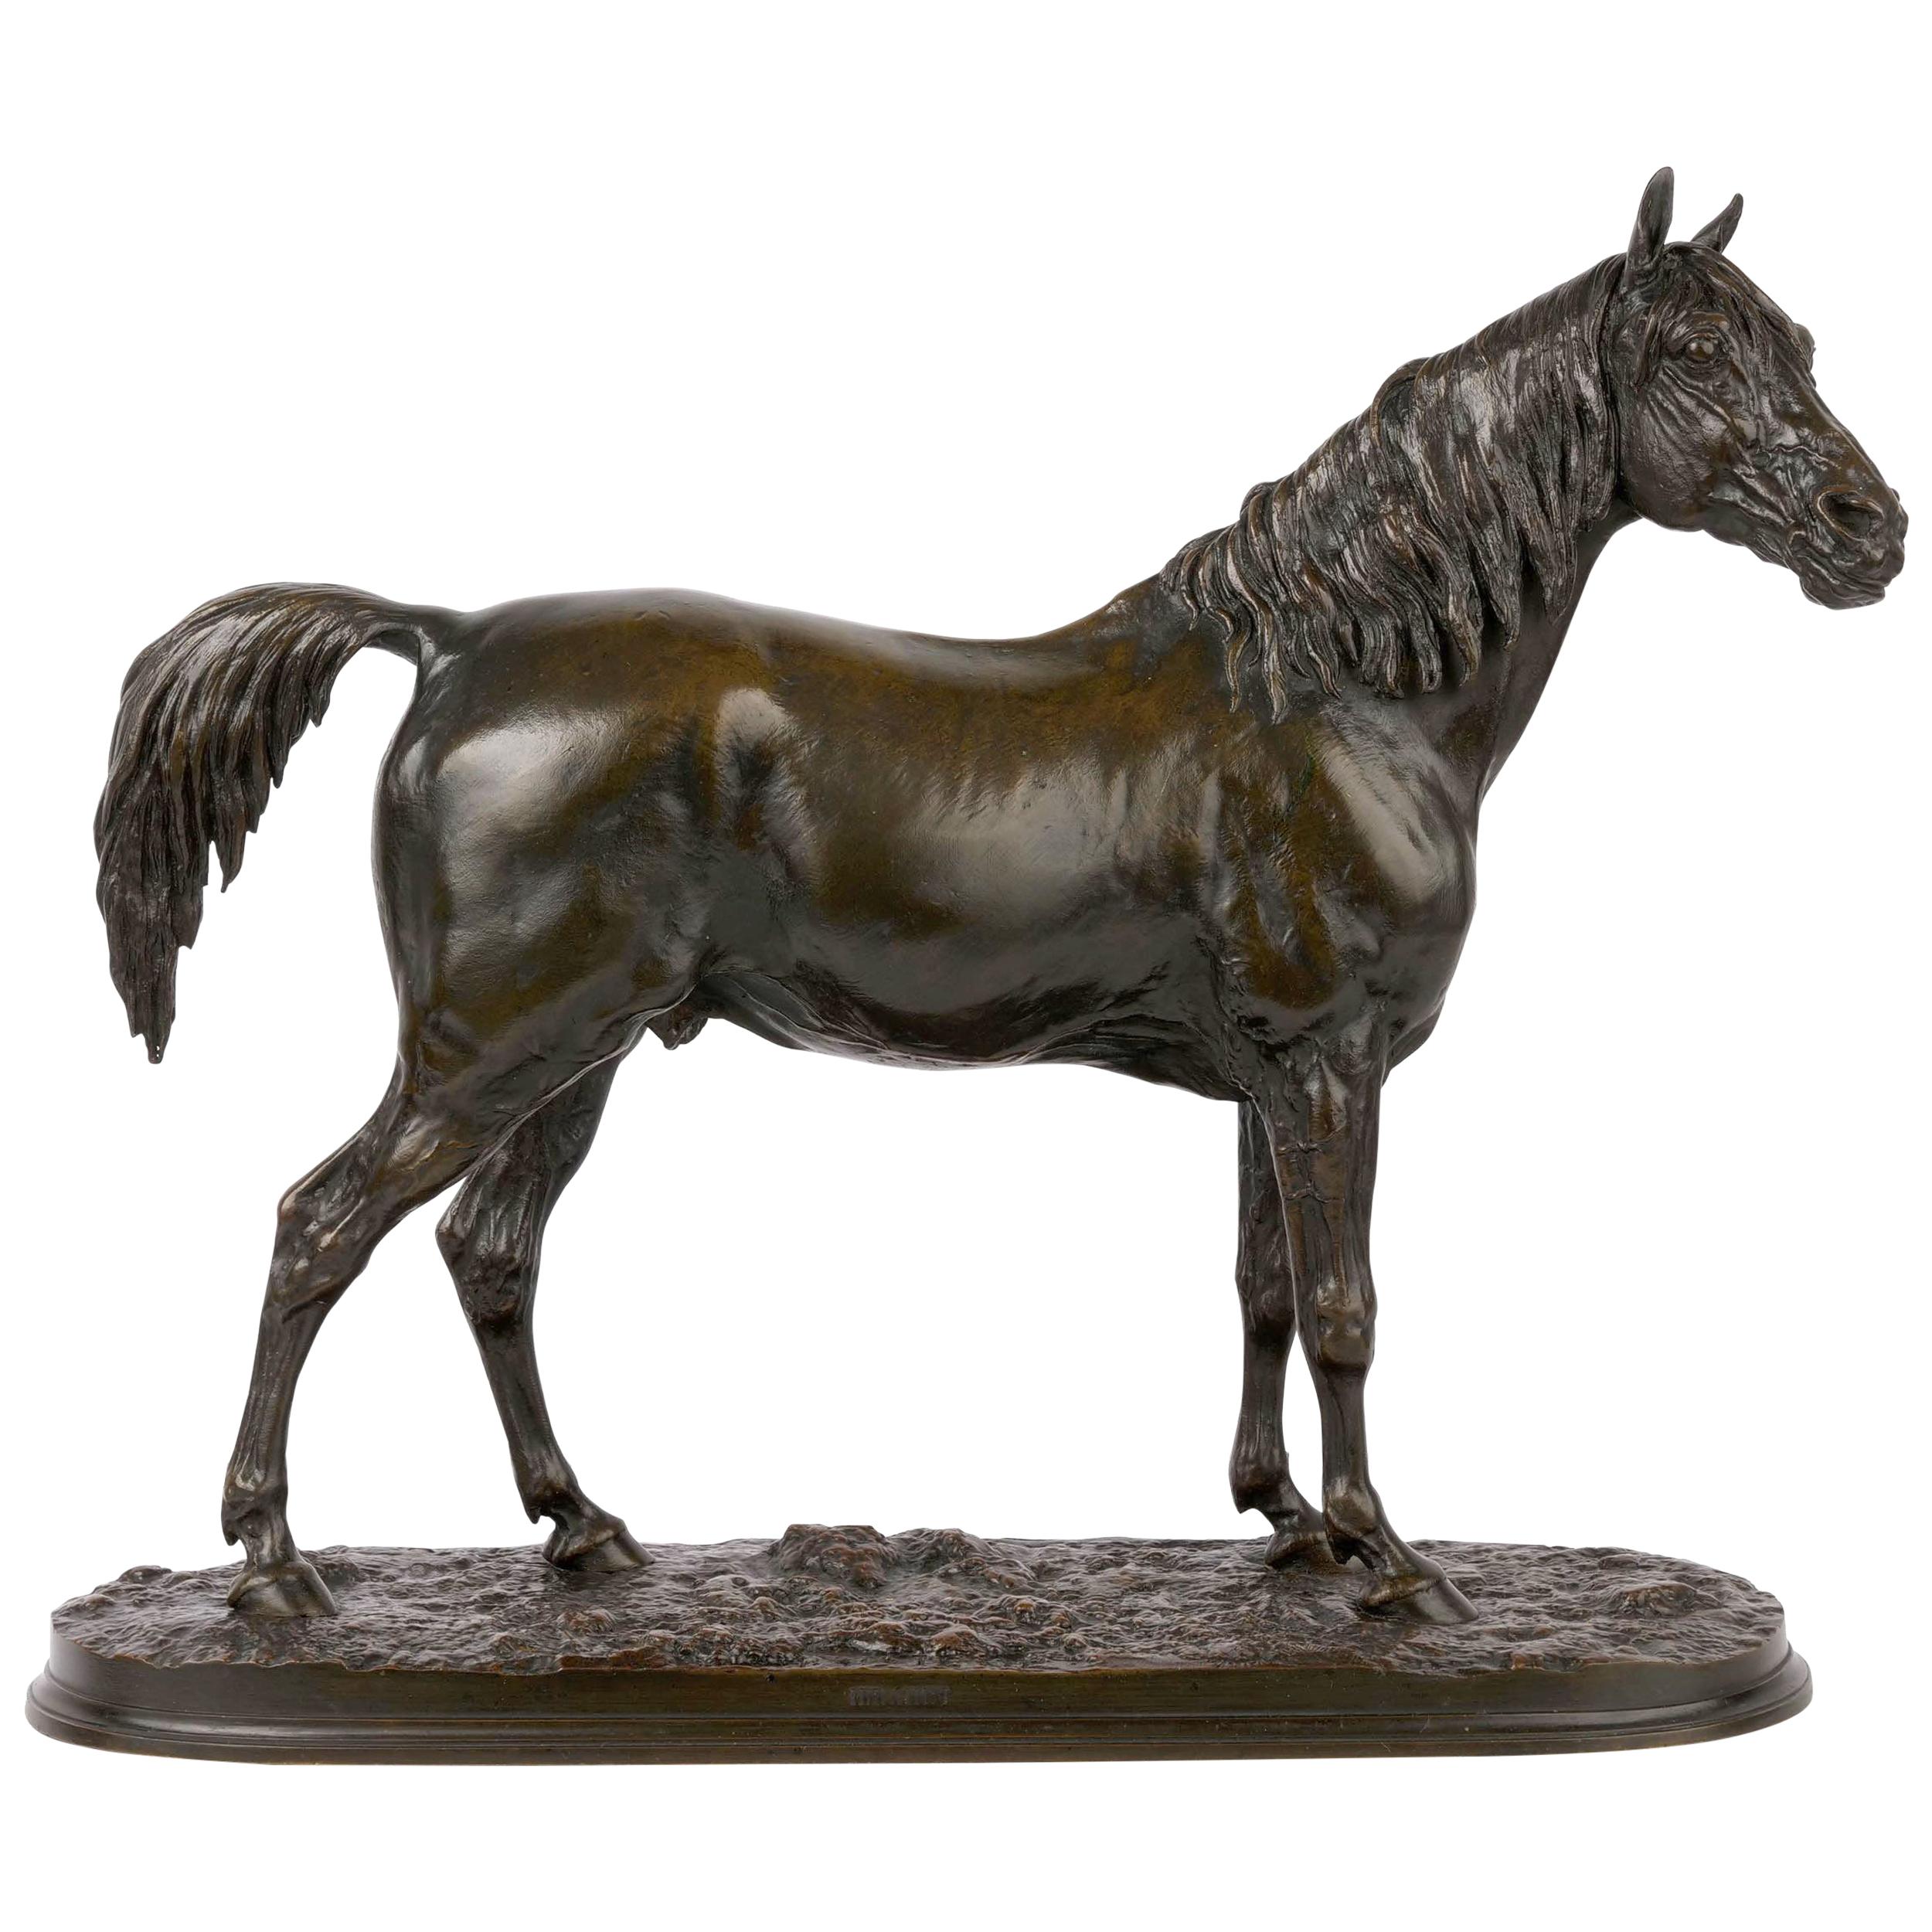 French Antique Bronze Sculpture of Arabian Stallion “Ibrahim” after Pierre Jules